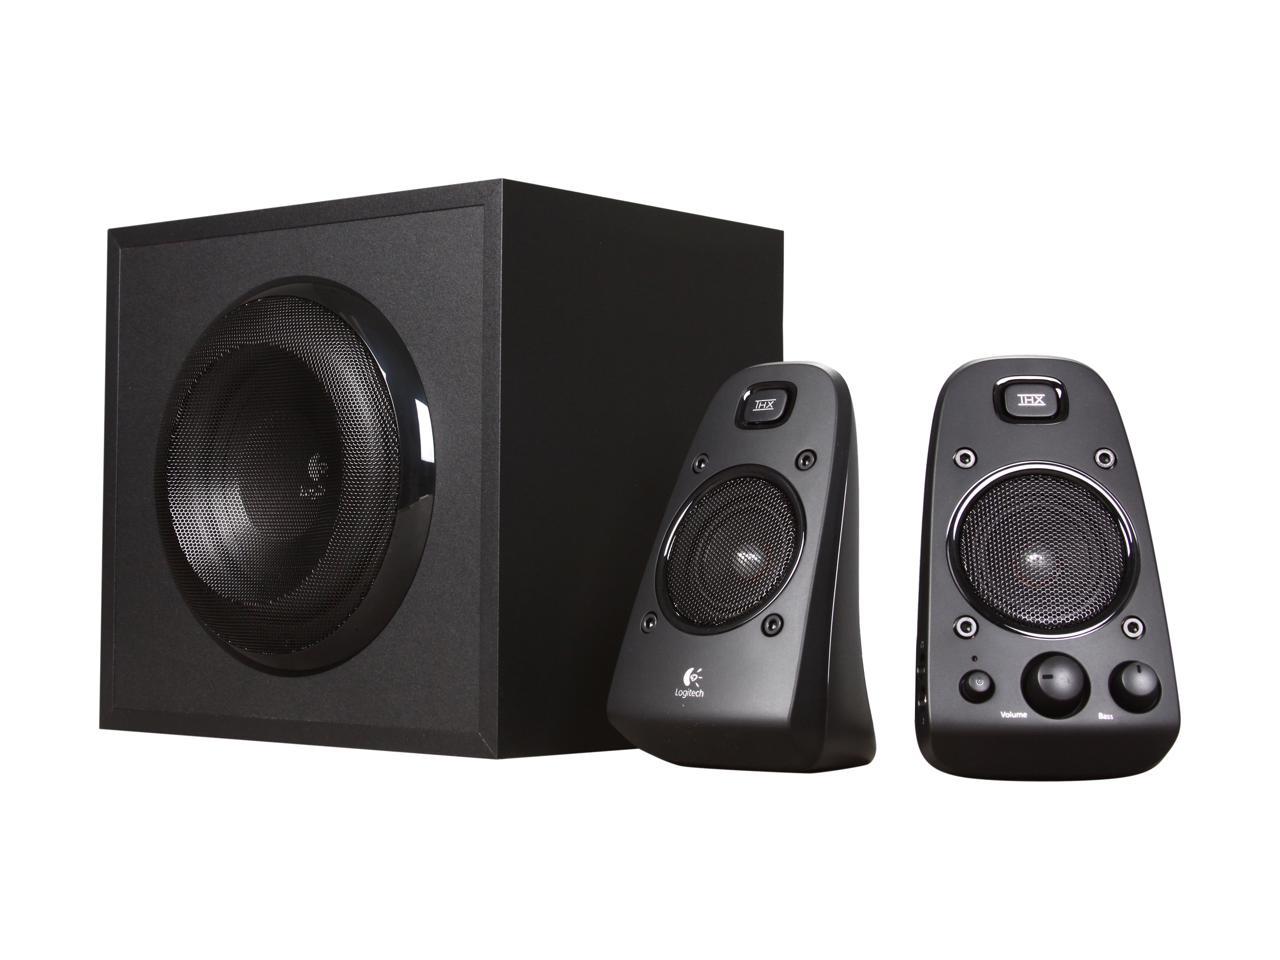 Logitech 980-000402-cr Z623 400 Watt Home Speaker System Certified Refurbished 2.1 Speaker System One Size Black